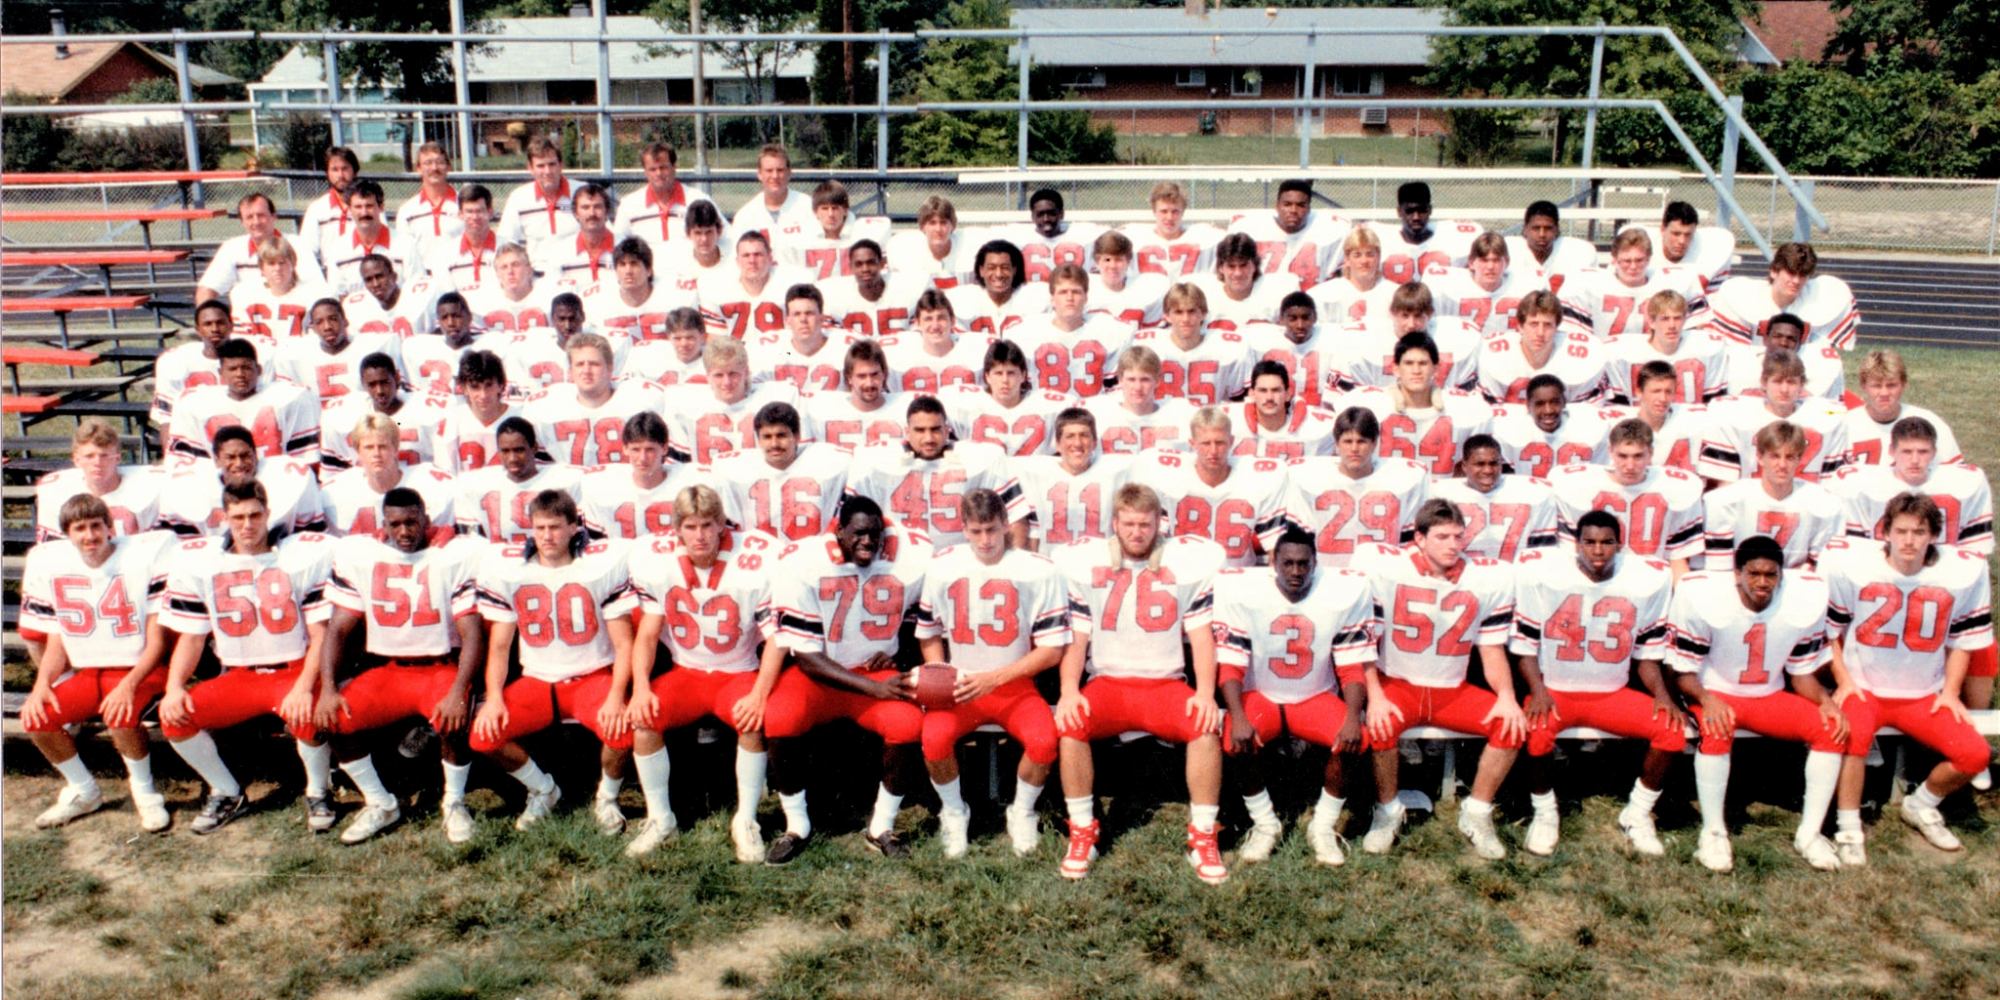 1986 Wayne Warriors Football Team Picture